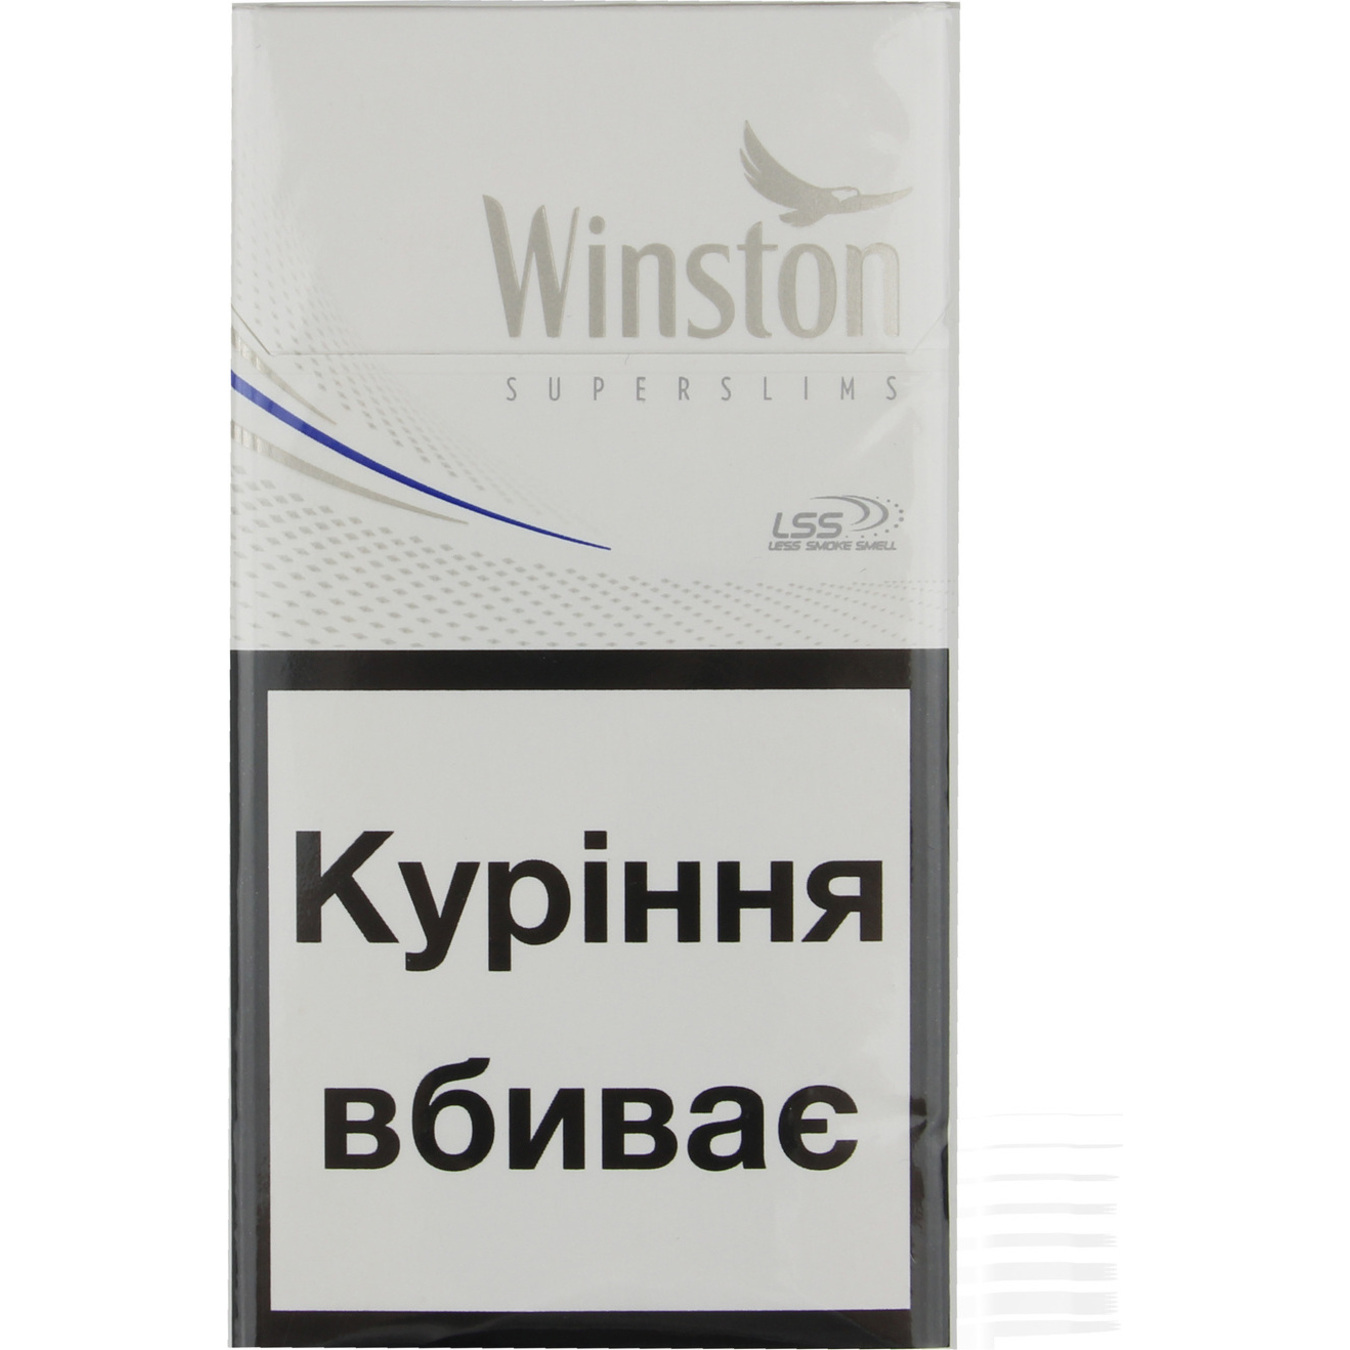 Сигареты Winston Silver Super Slims (цена указана без акциза)